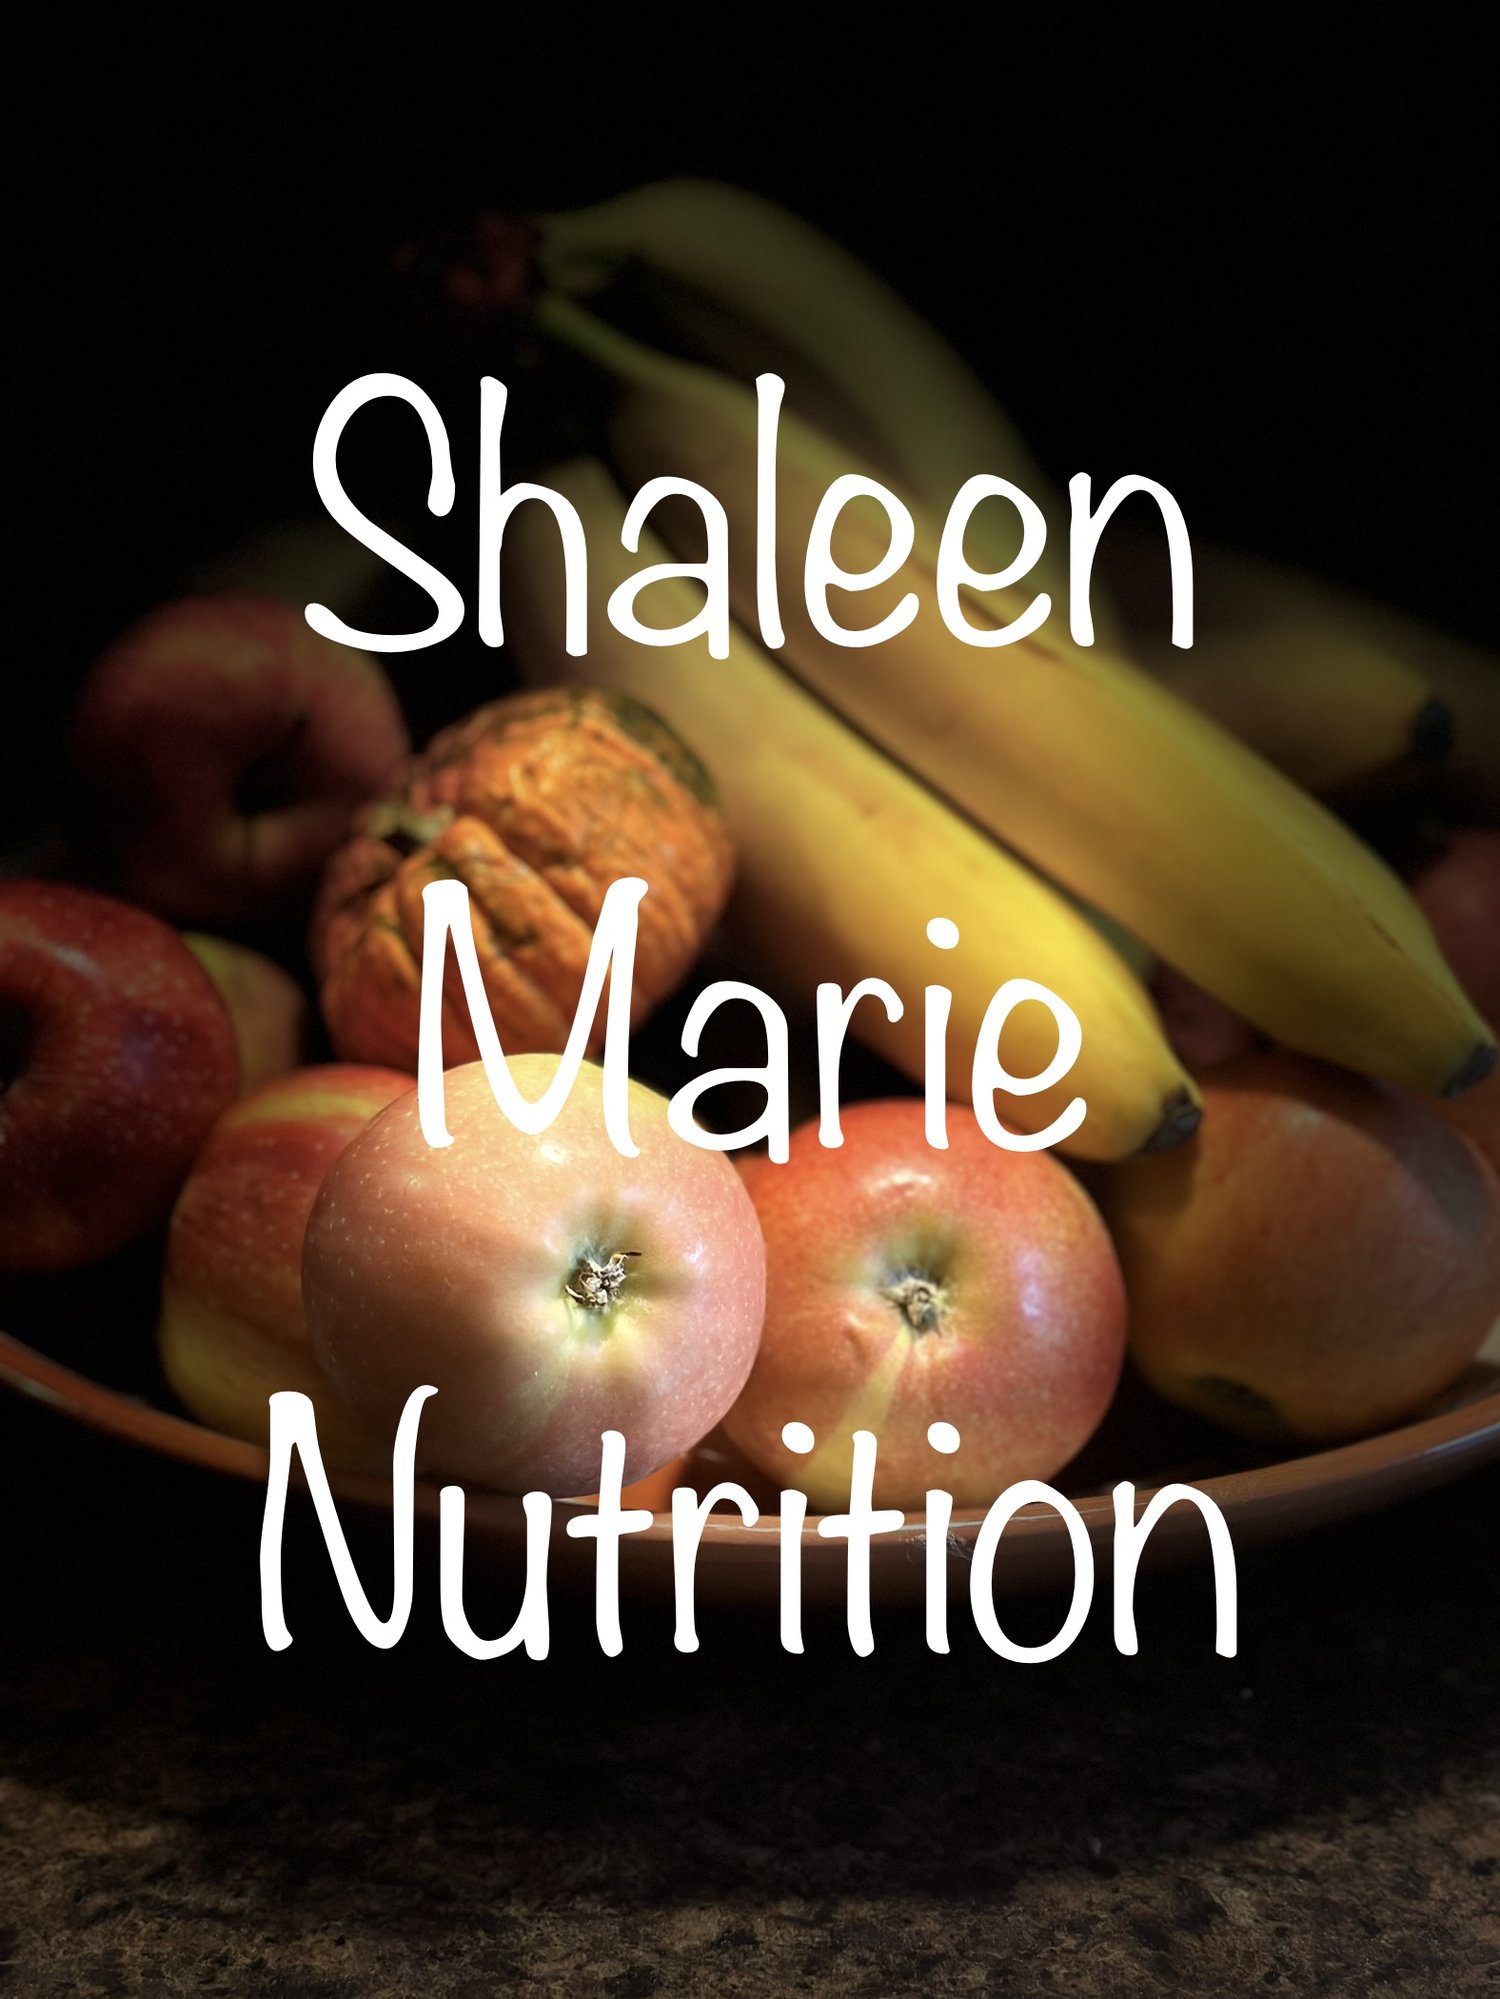 Shaleen Marie Nutrition